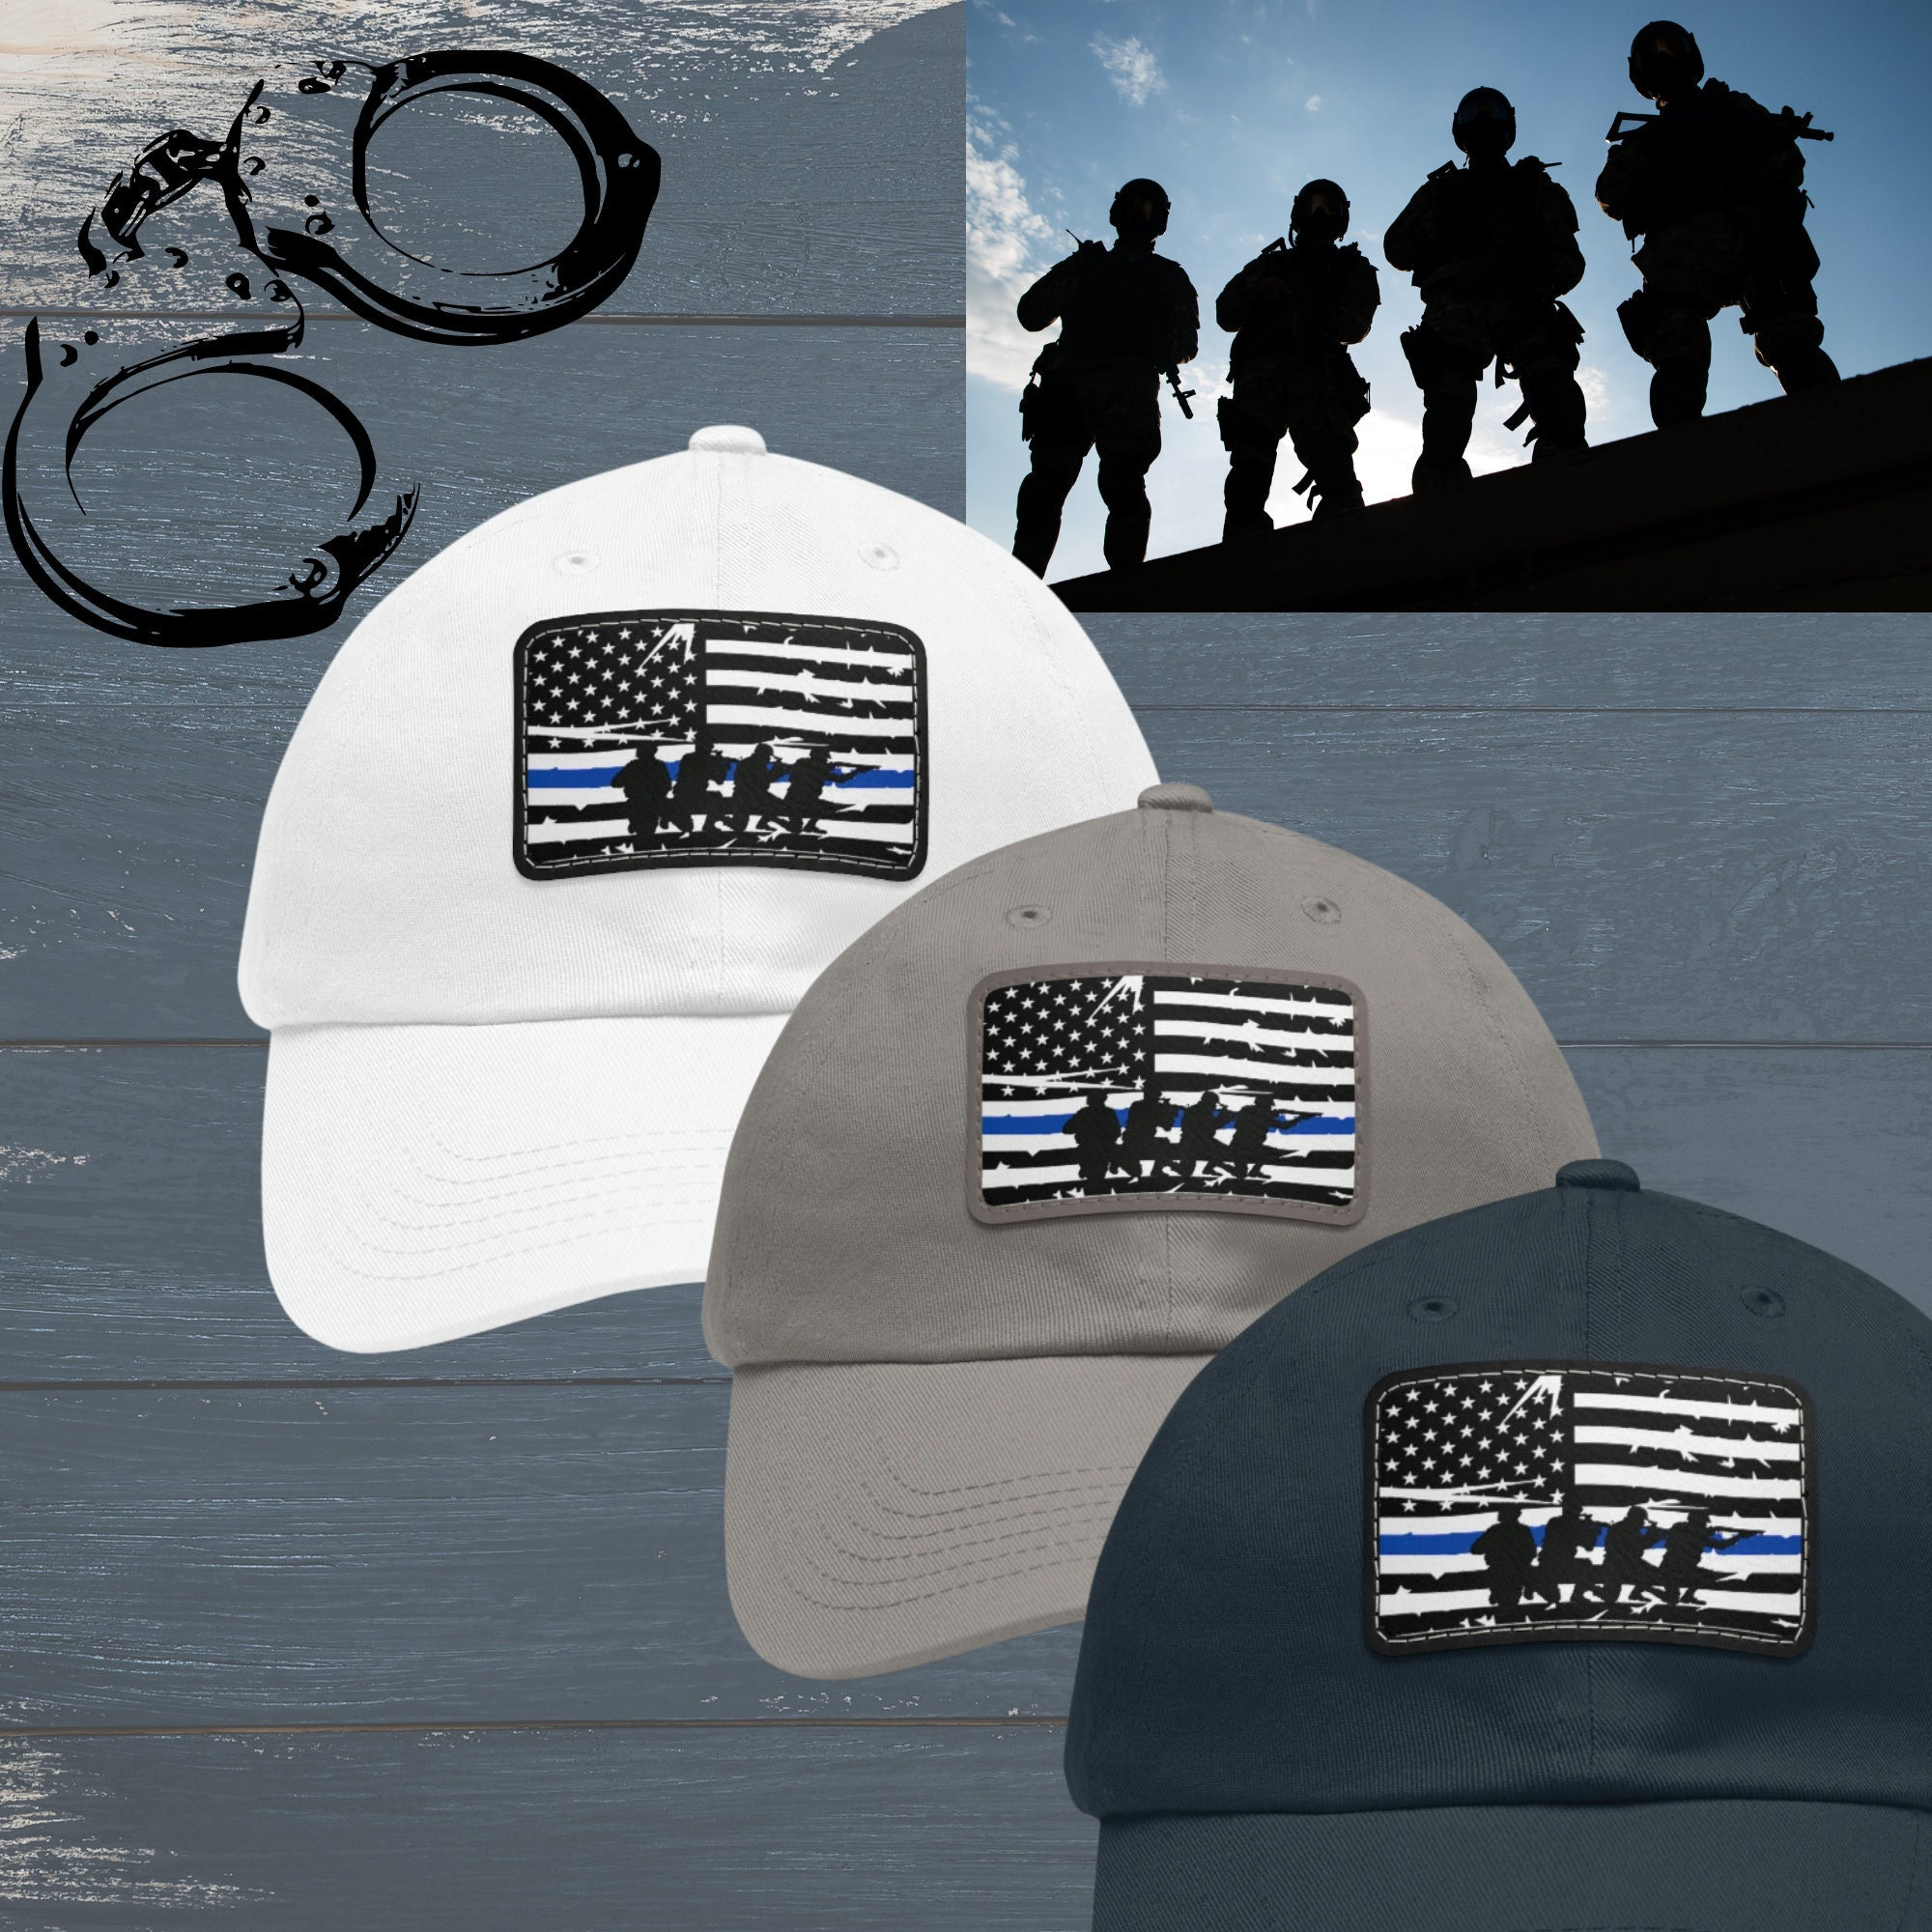 SWAT Army Cap Male Embroidered Eagle Black Baseball Caps Men Gorras Para  Hombre Women Snapback Bone